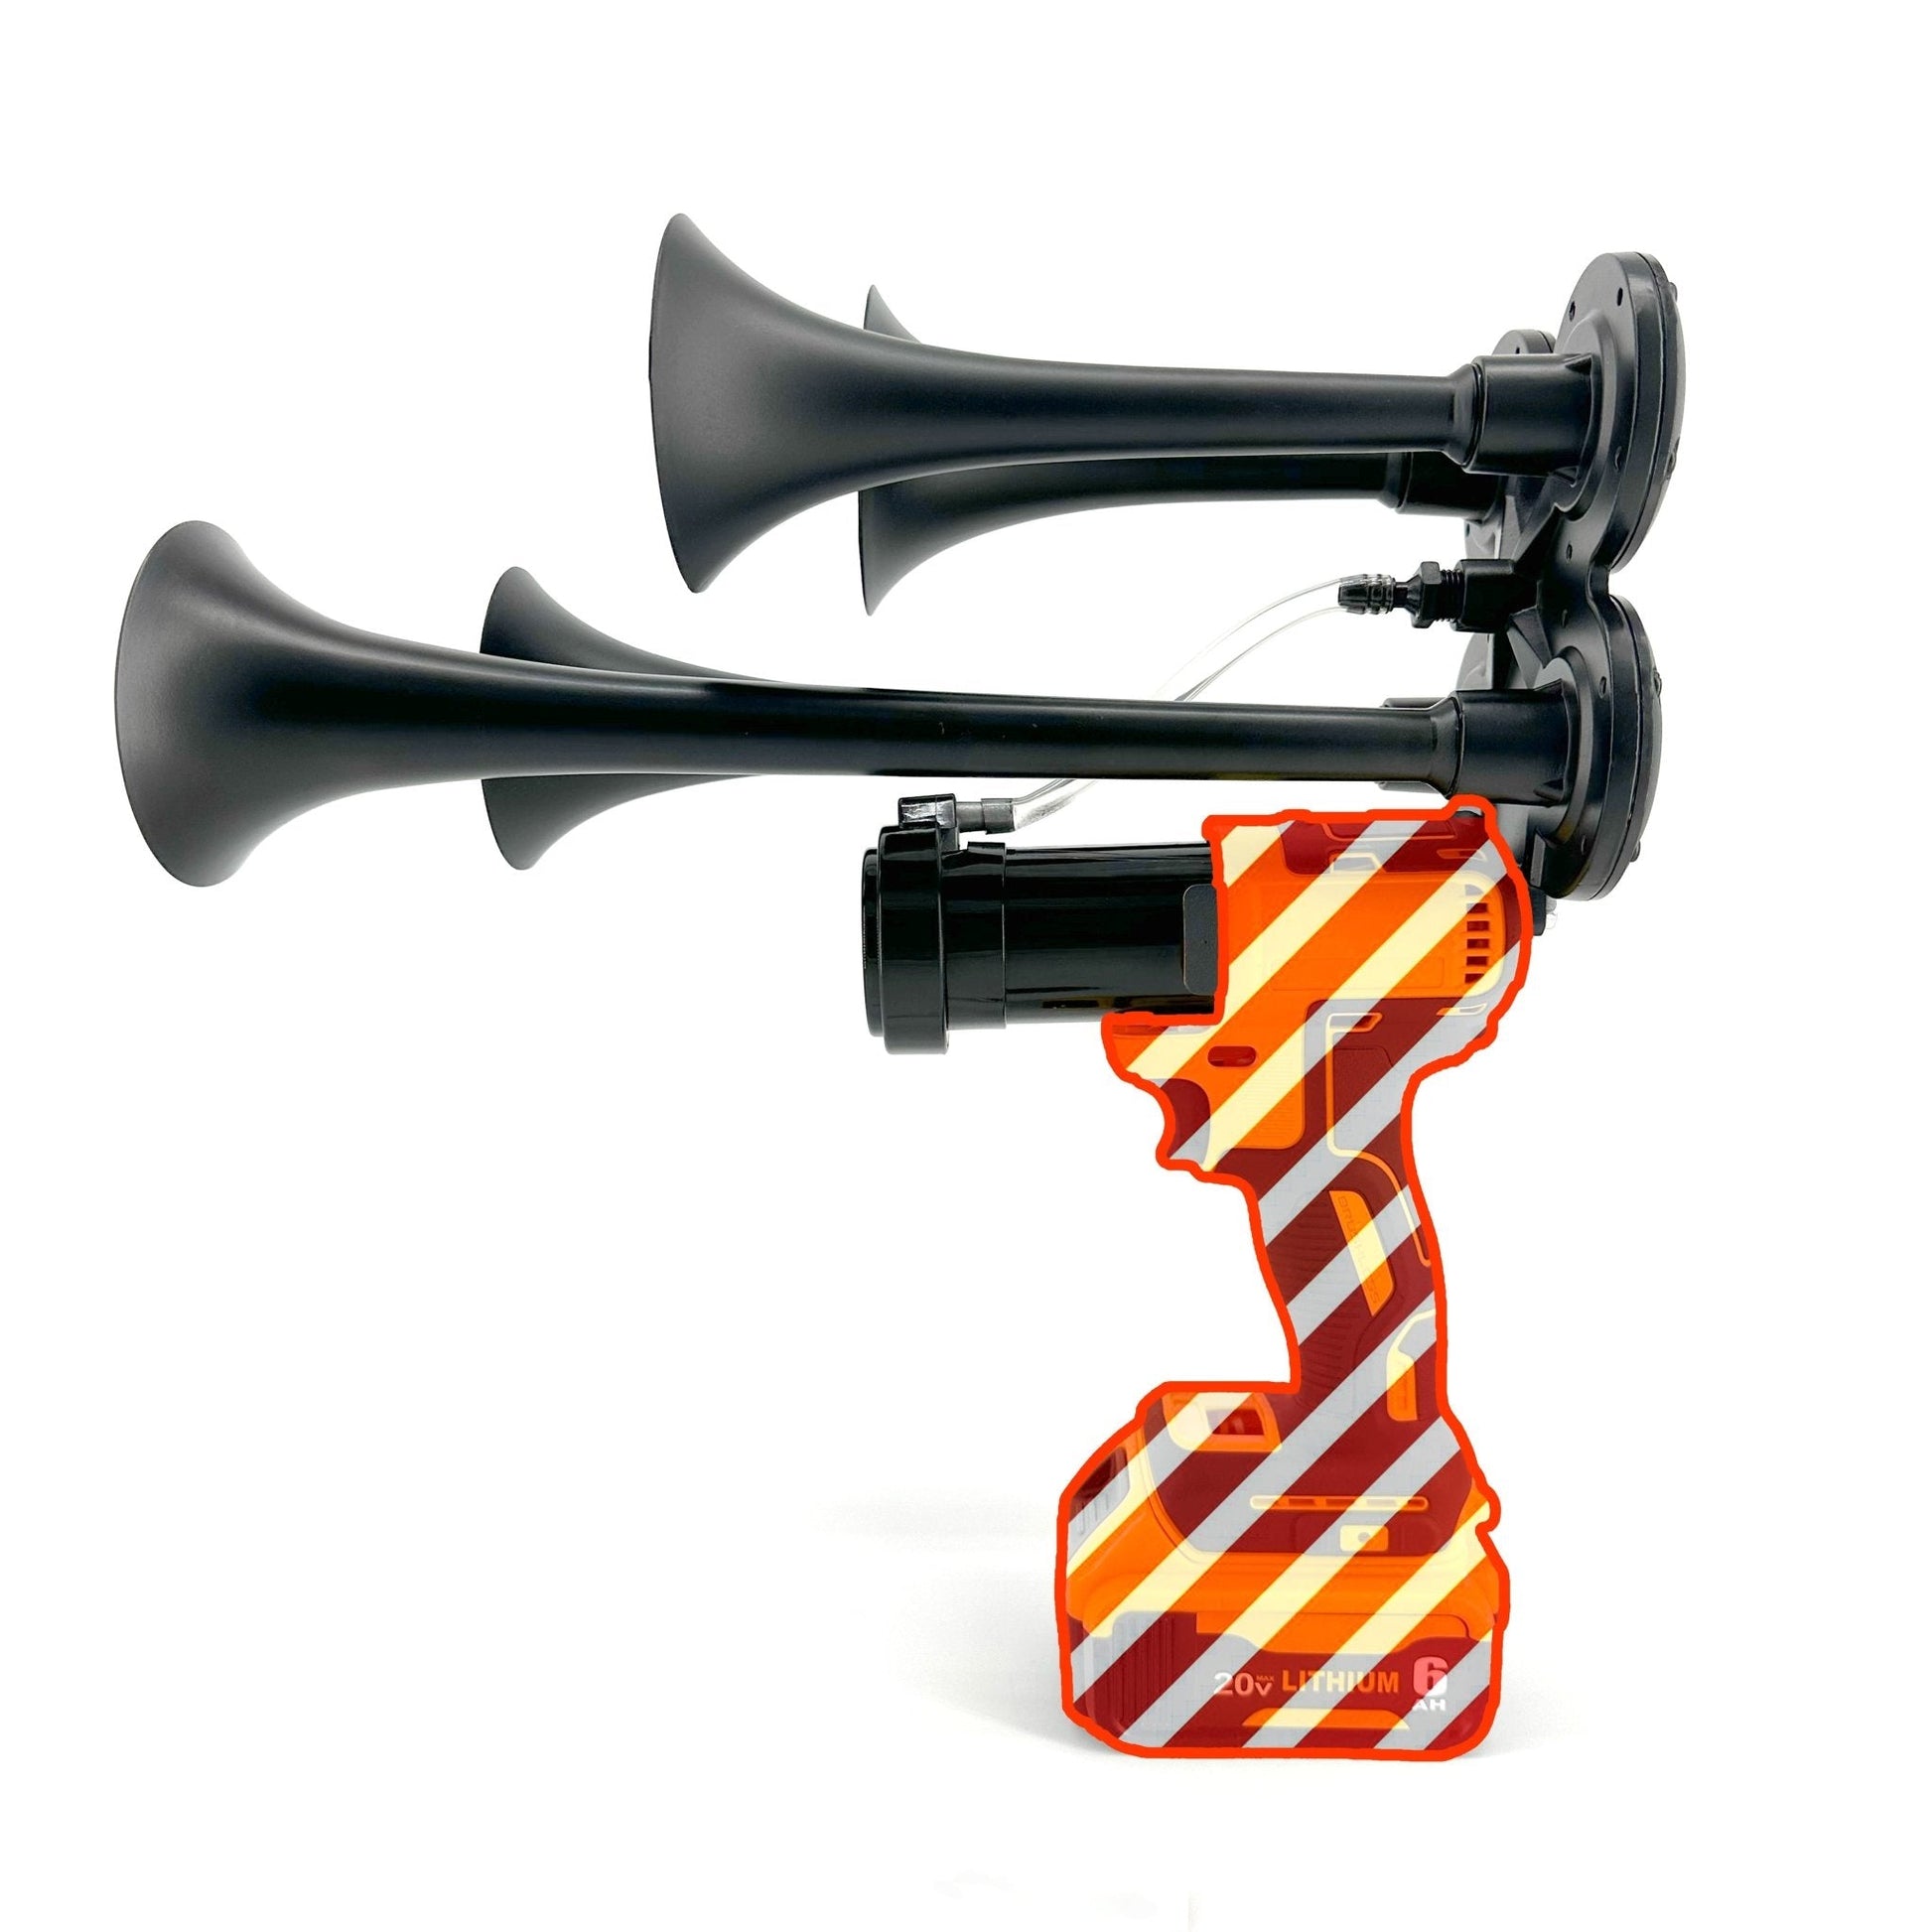 DIY Train Horn Gun Kit with 4 Trumpets (Universal) – Horngun